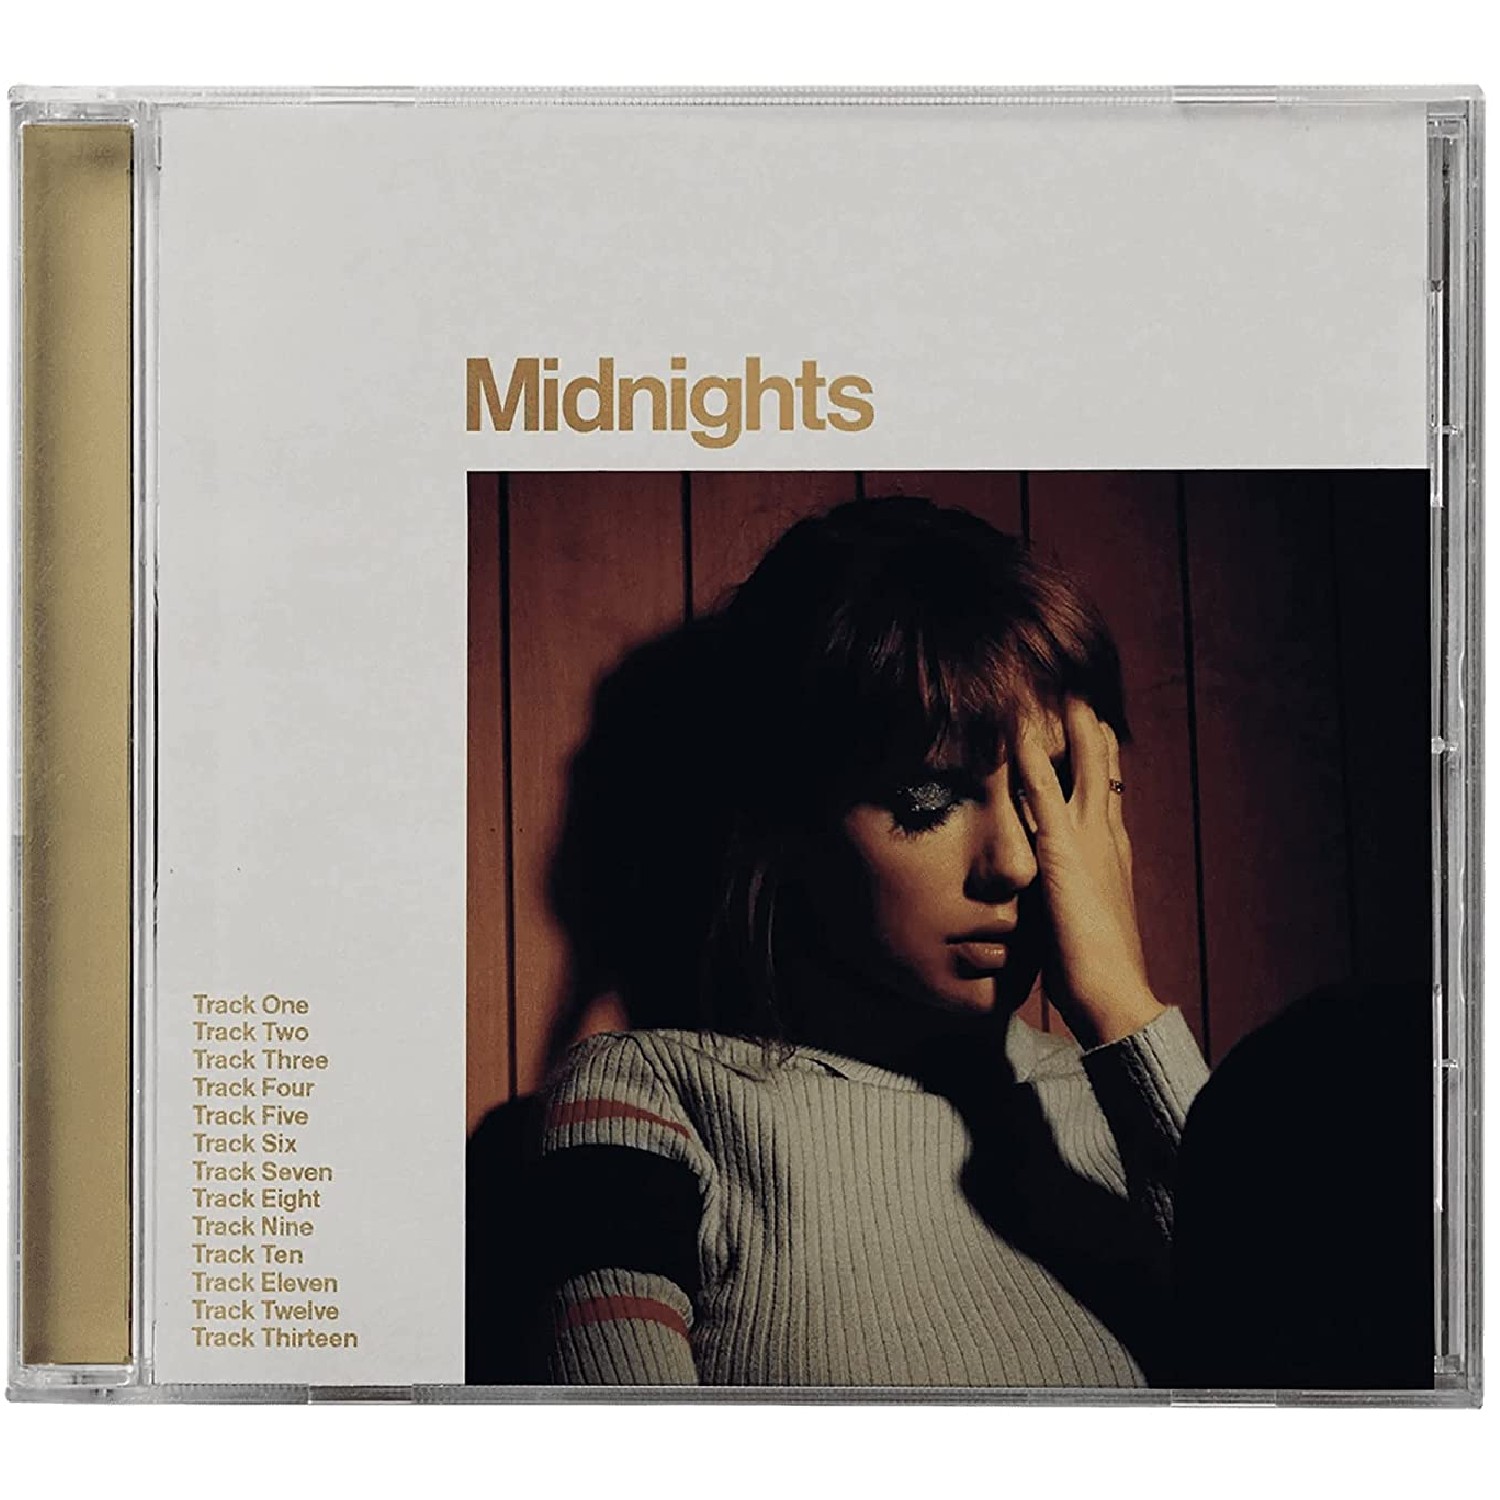 Taylor Swift - Midnights (Mahogany edition CD)